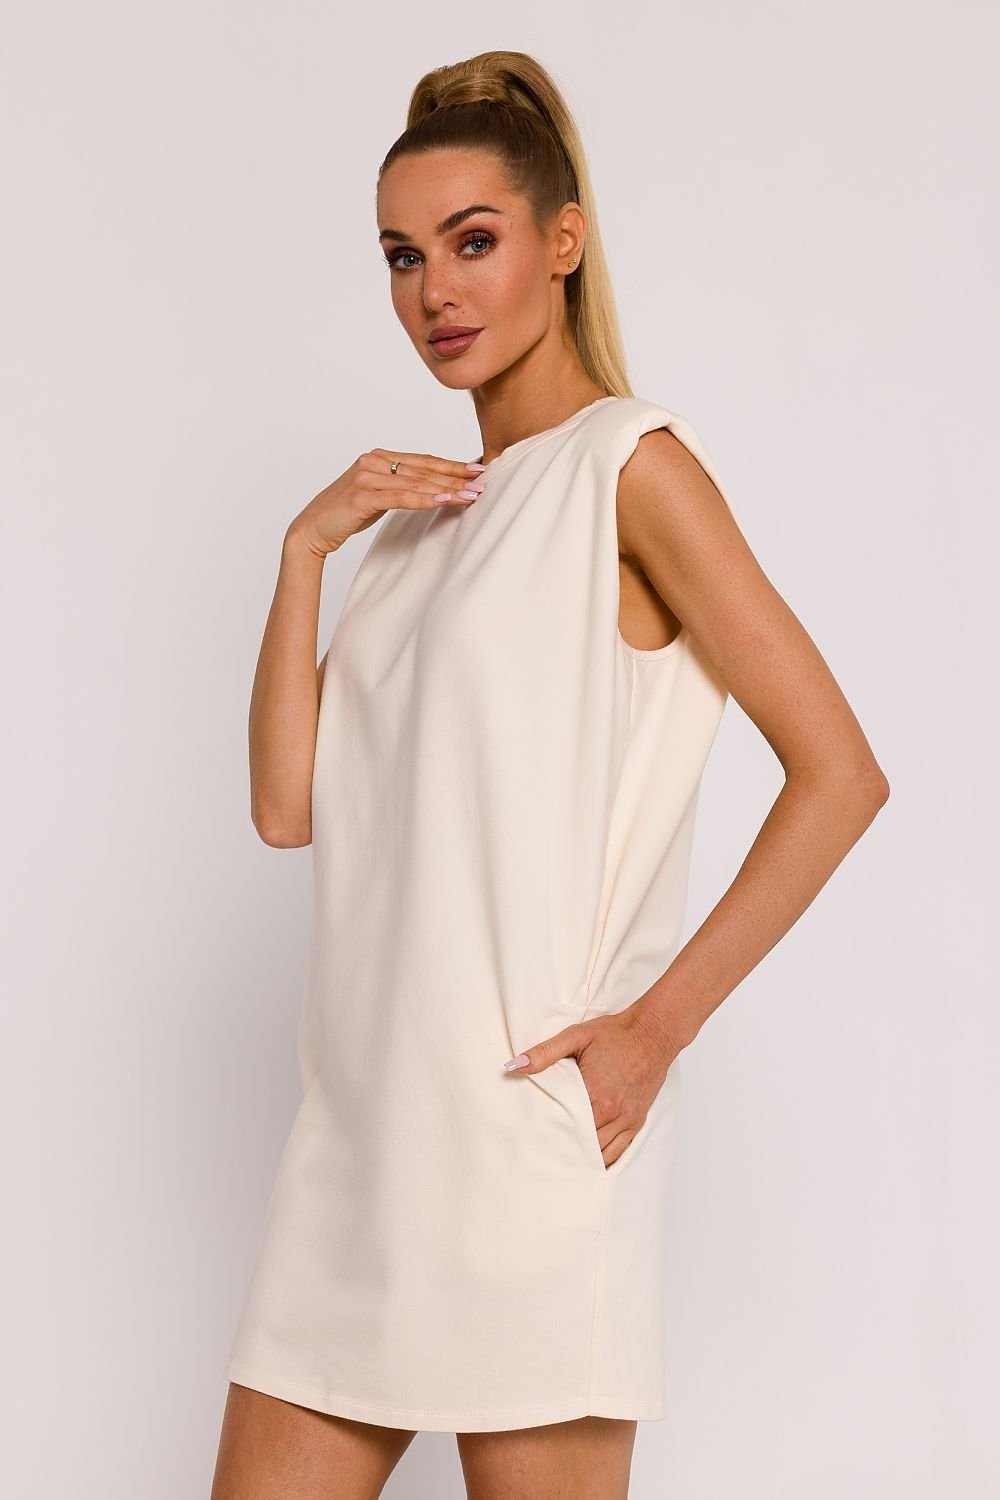 TEEK - Shrug Solid Pocketed Sleeveless Dress DRESS TEEK MH beige L 